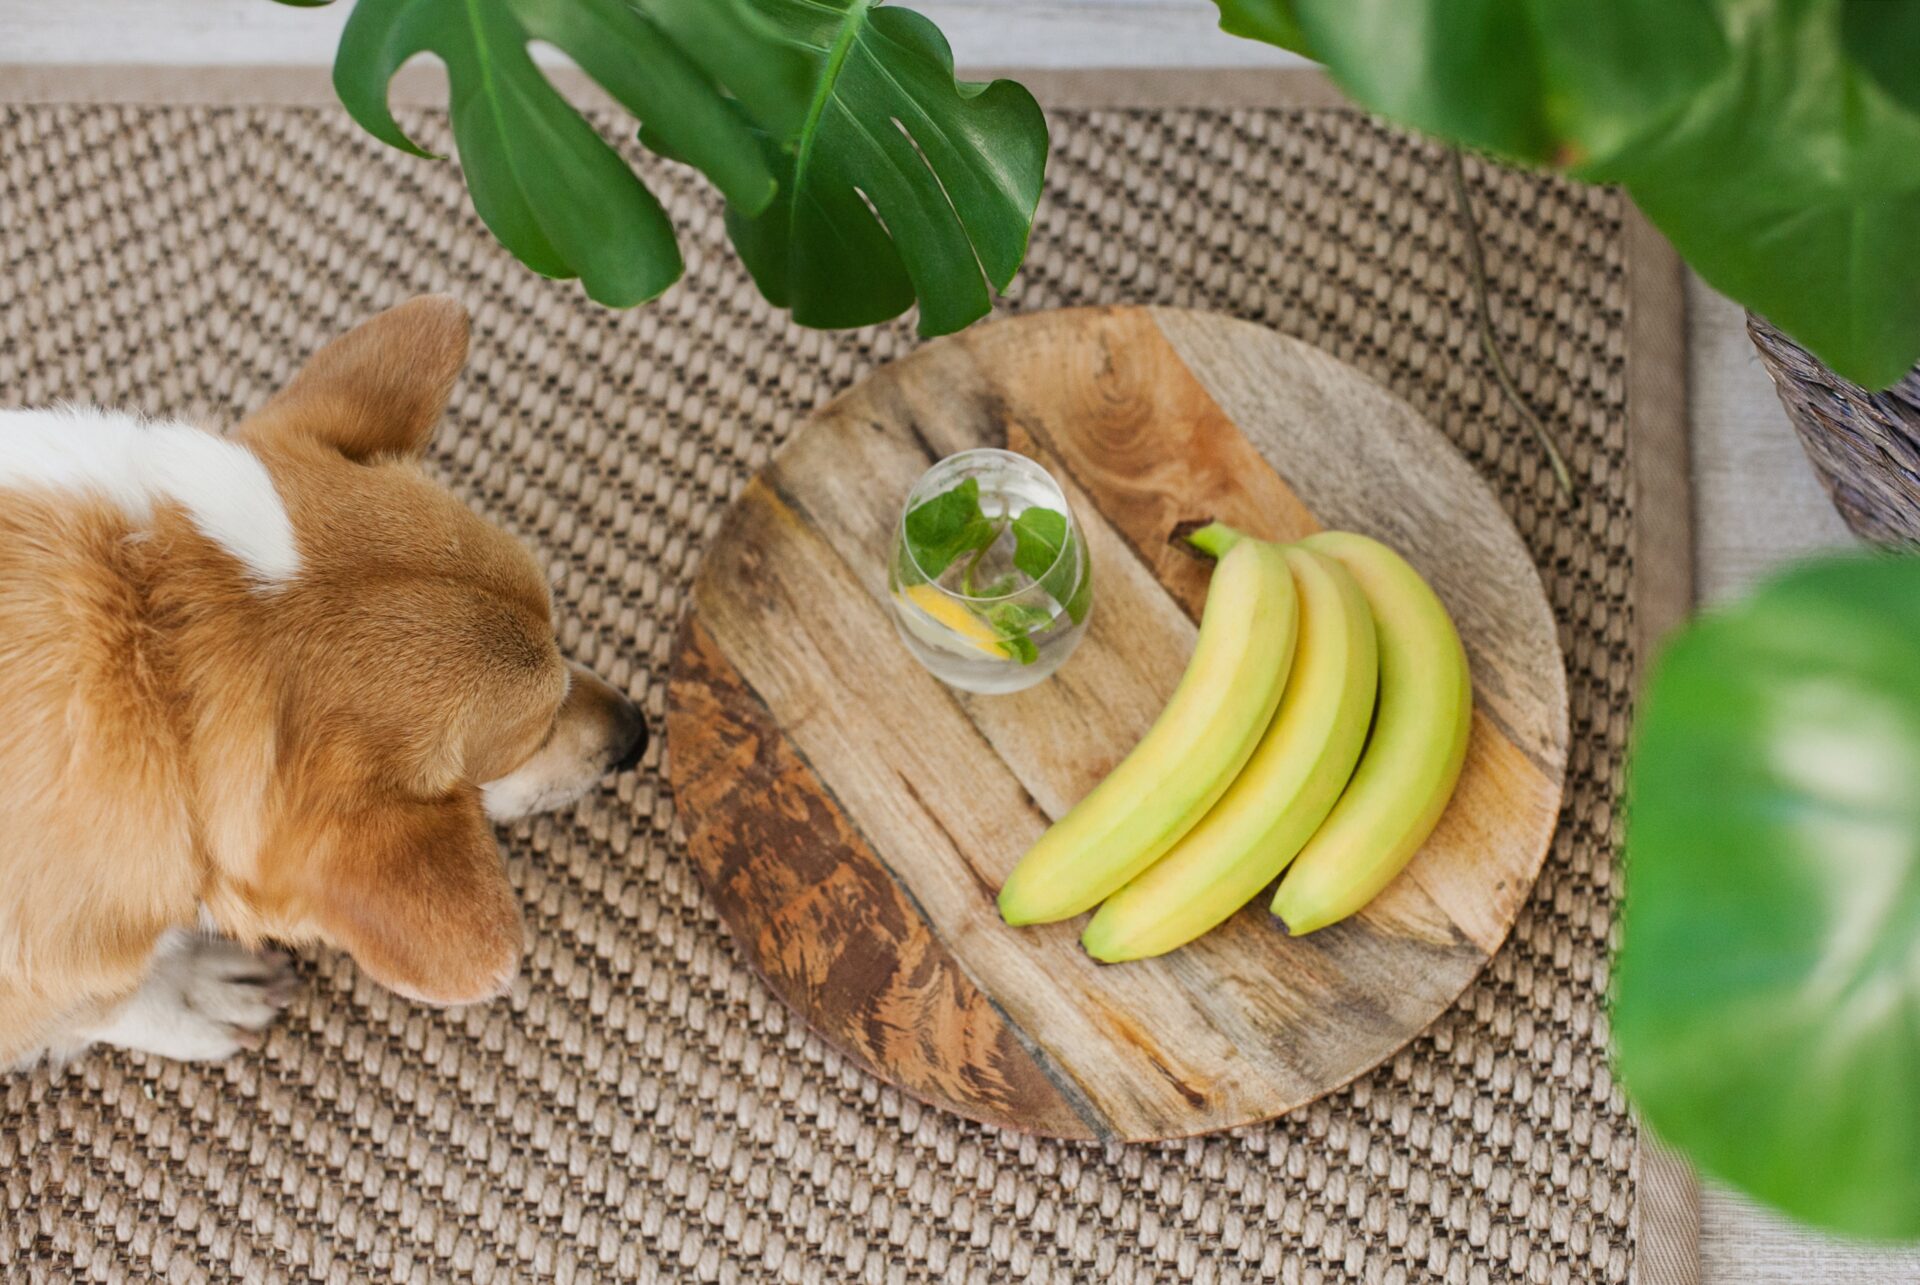 dog eating bananas